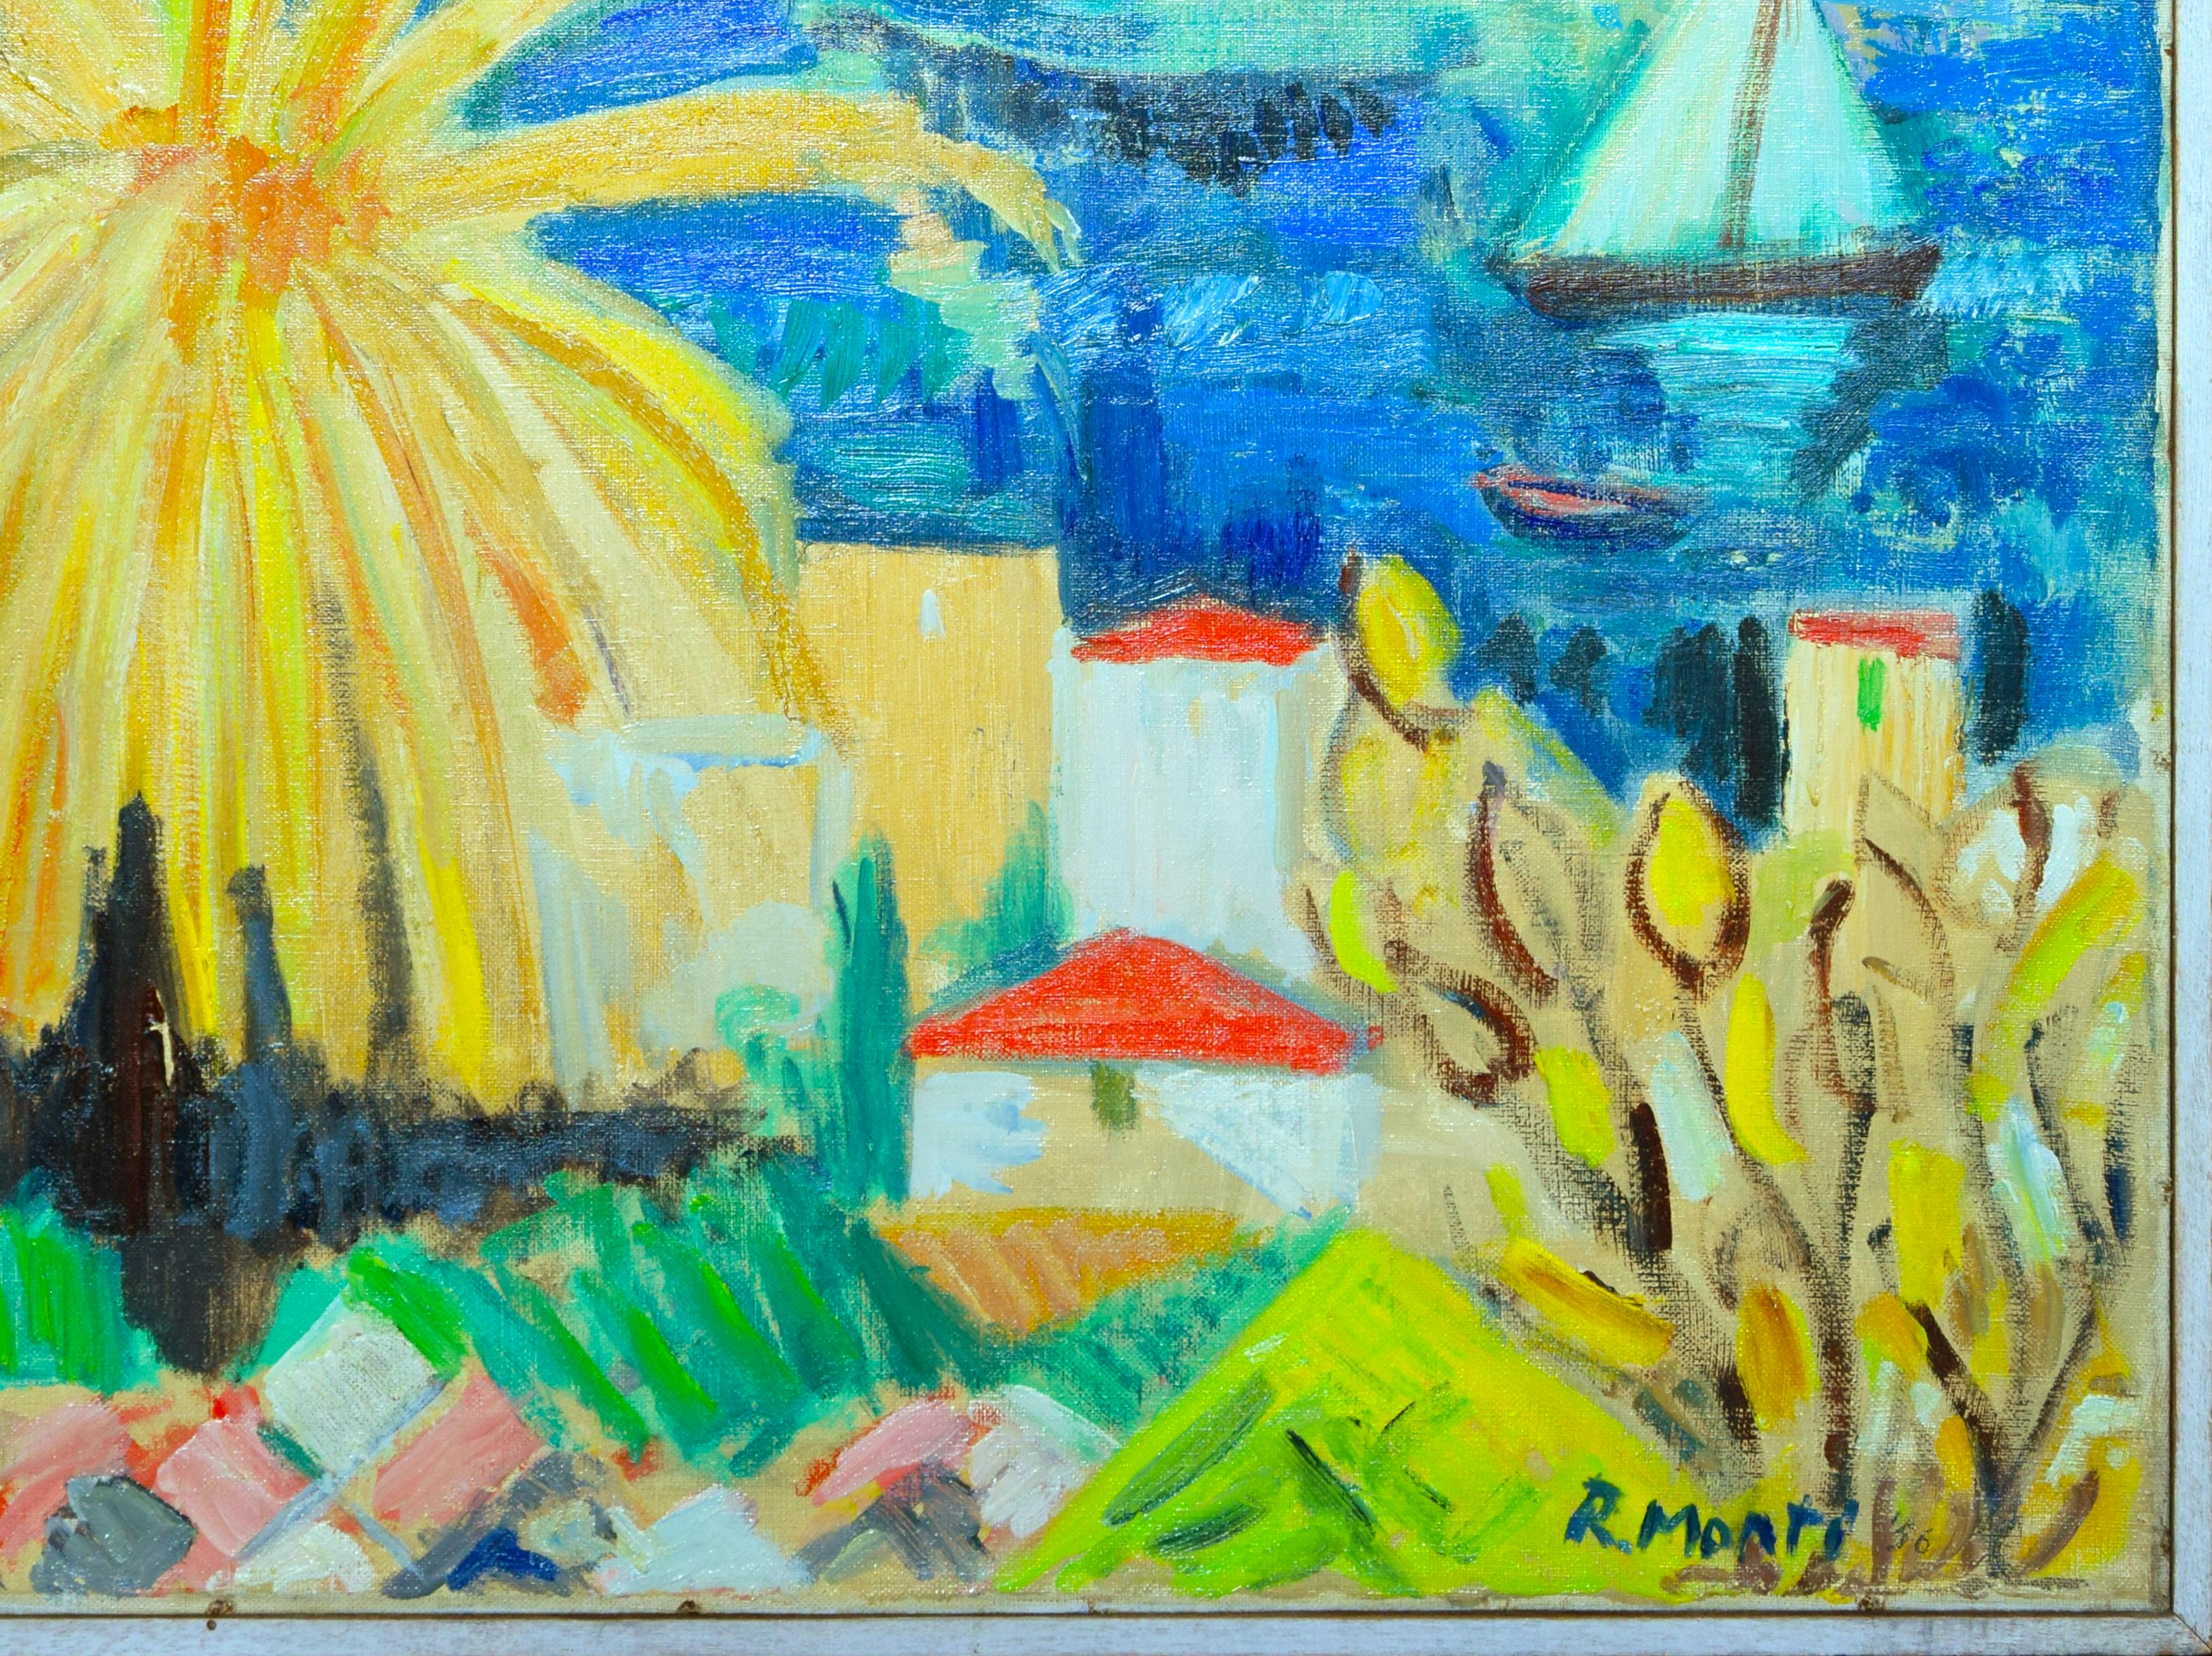 Rolando Monti Landscape Painting - Sun in Rapallo - Oil on Canvas by R. Monti - 1956